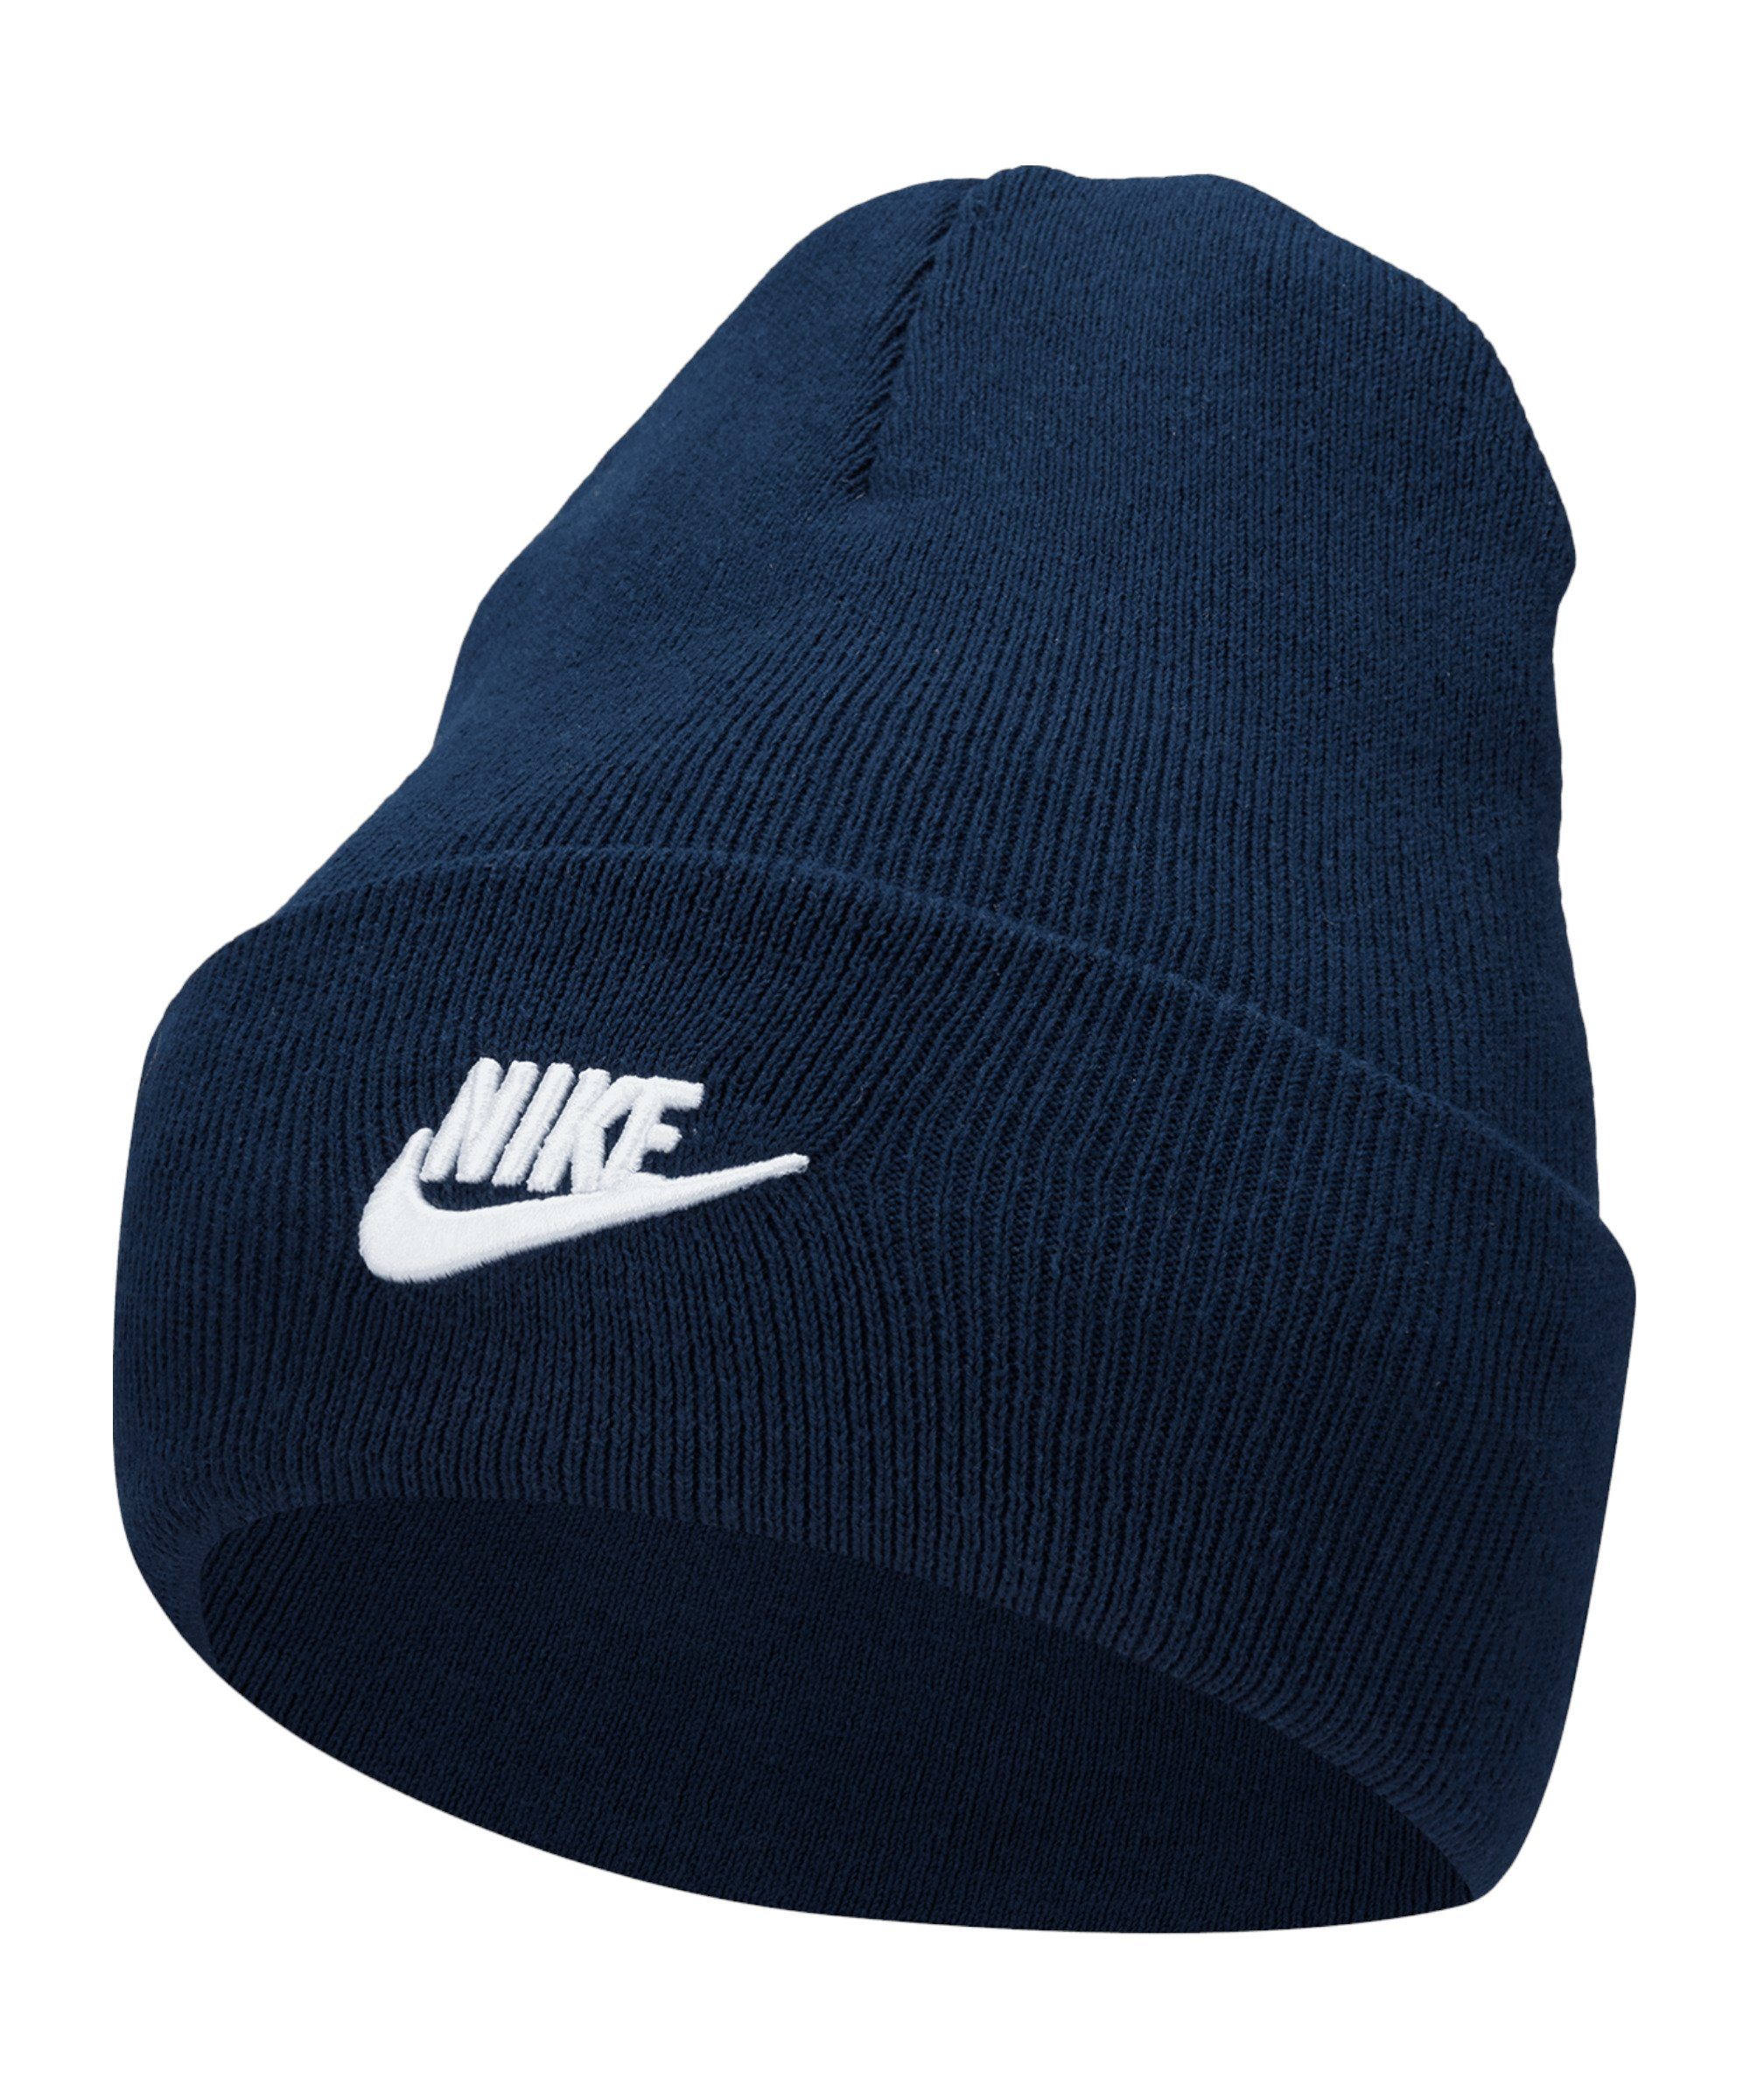 Nike Sportswear Baseball Mütze Cap blauweiss Utilitiy Futura